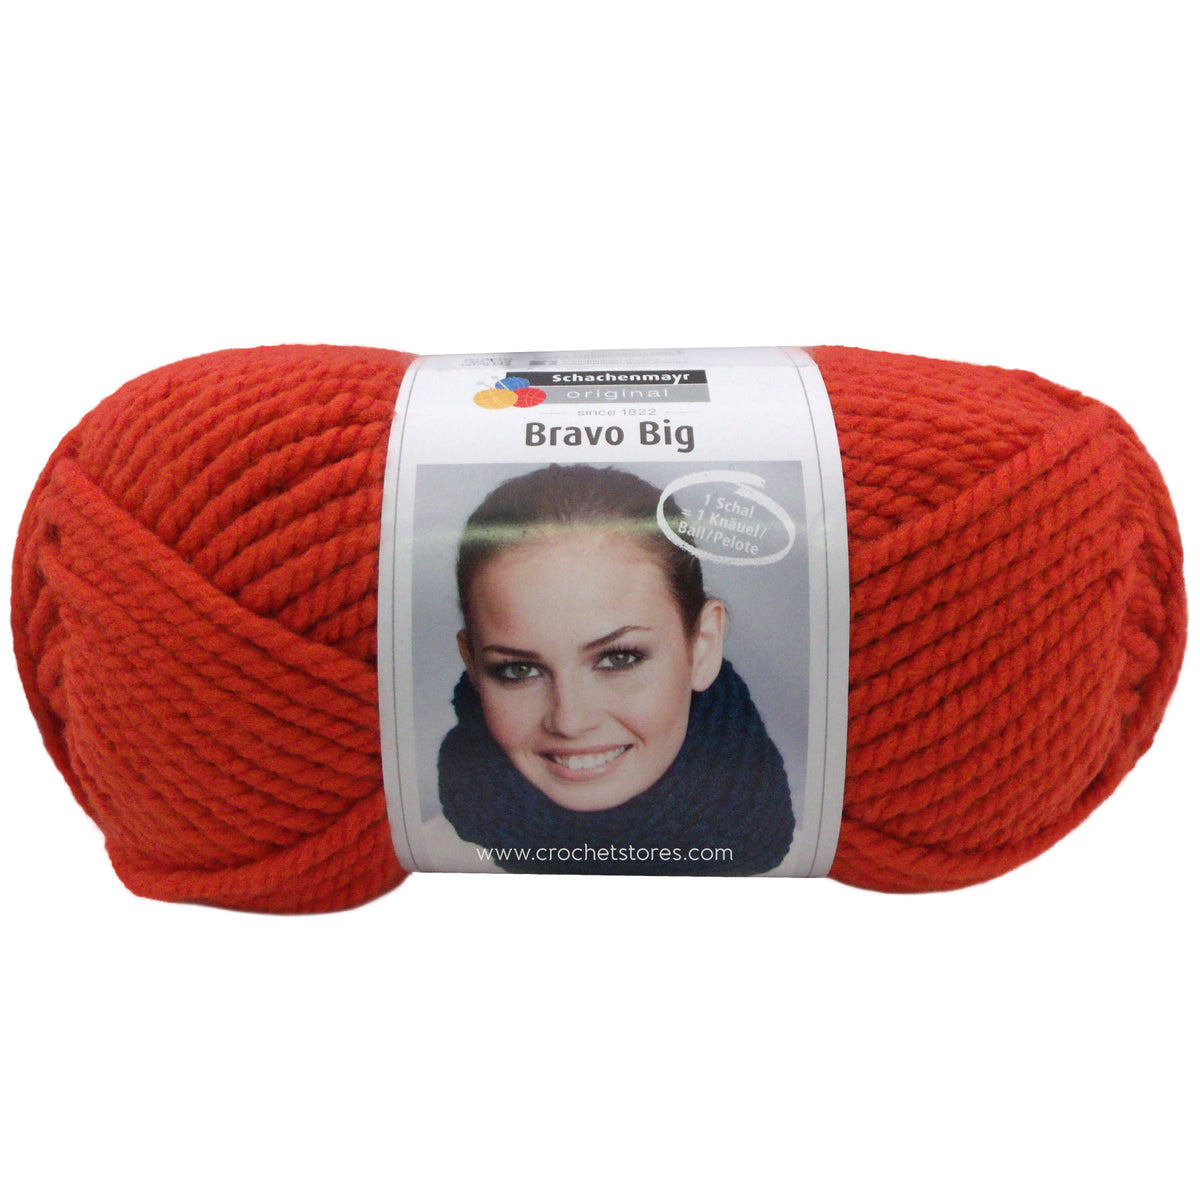 BRAVO BIG - Crochetstores9807705-1254053859044820